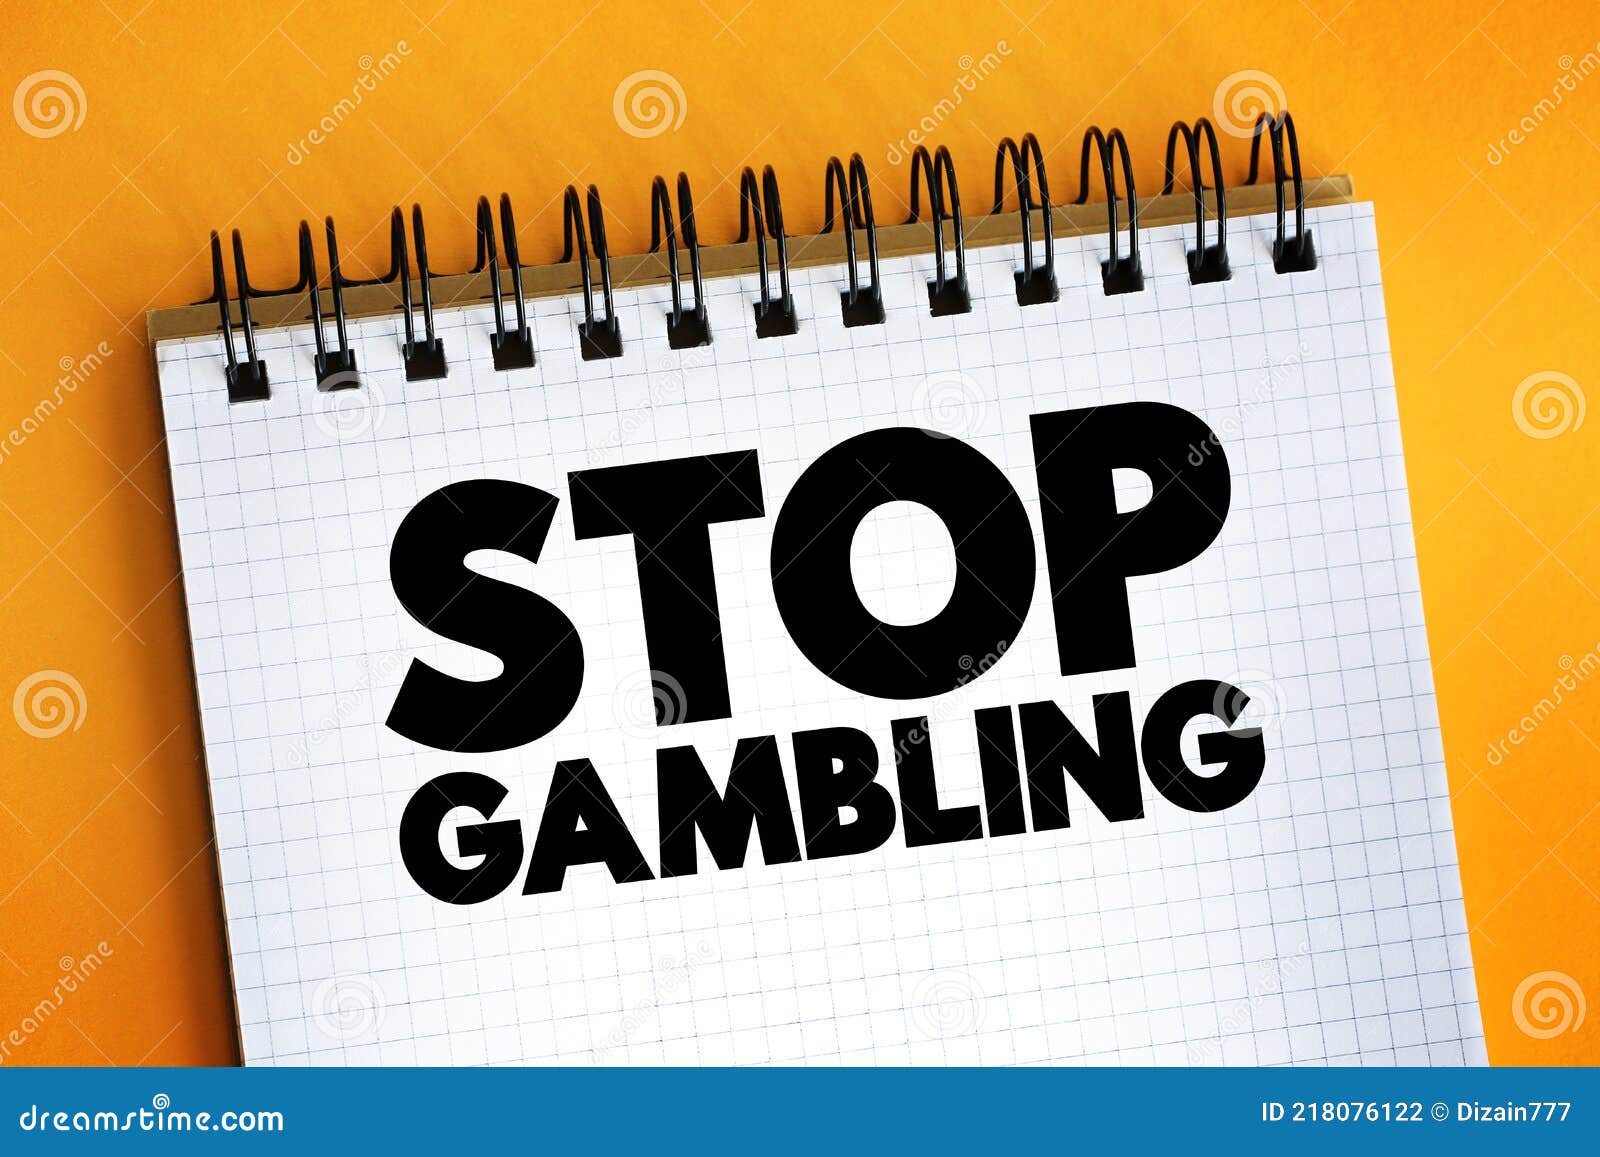 11 Methods Of Gambling Domination